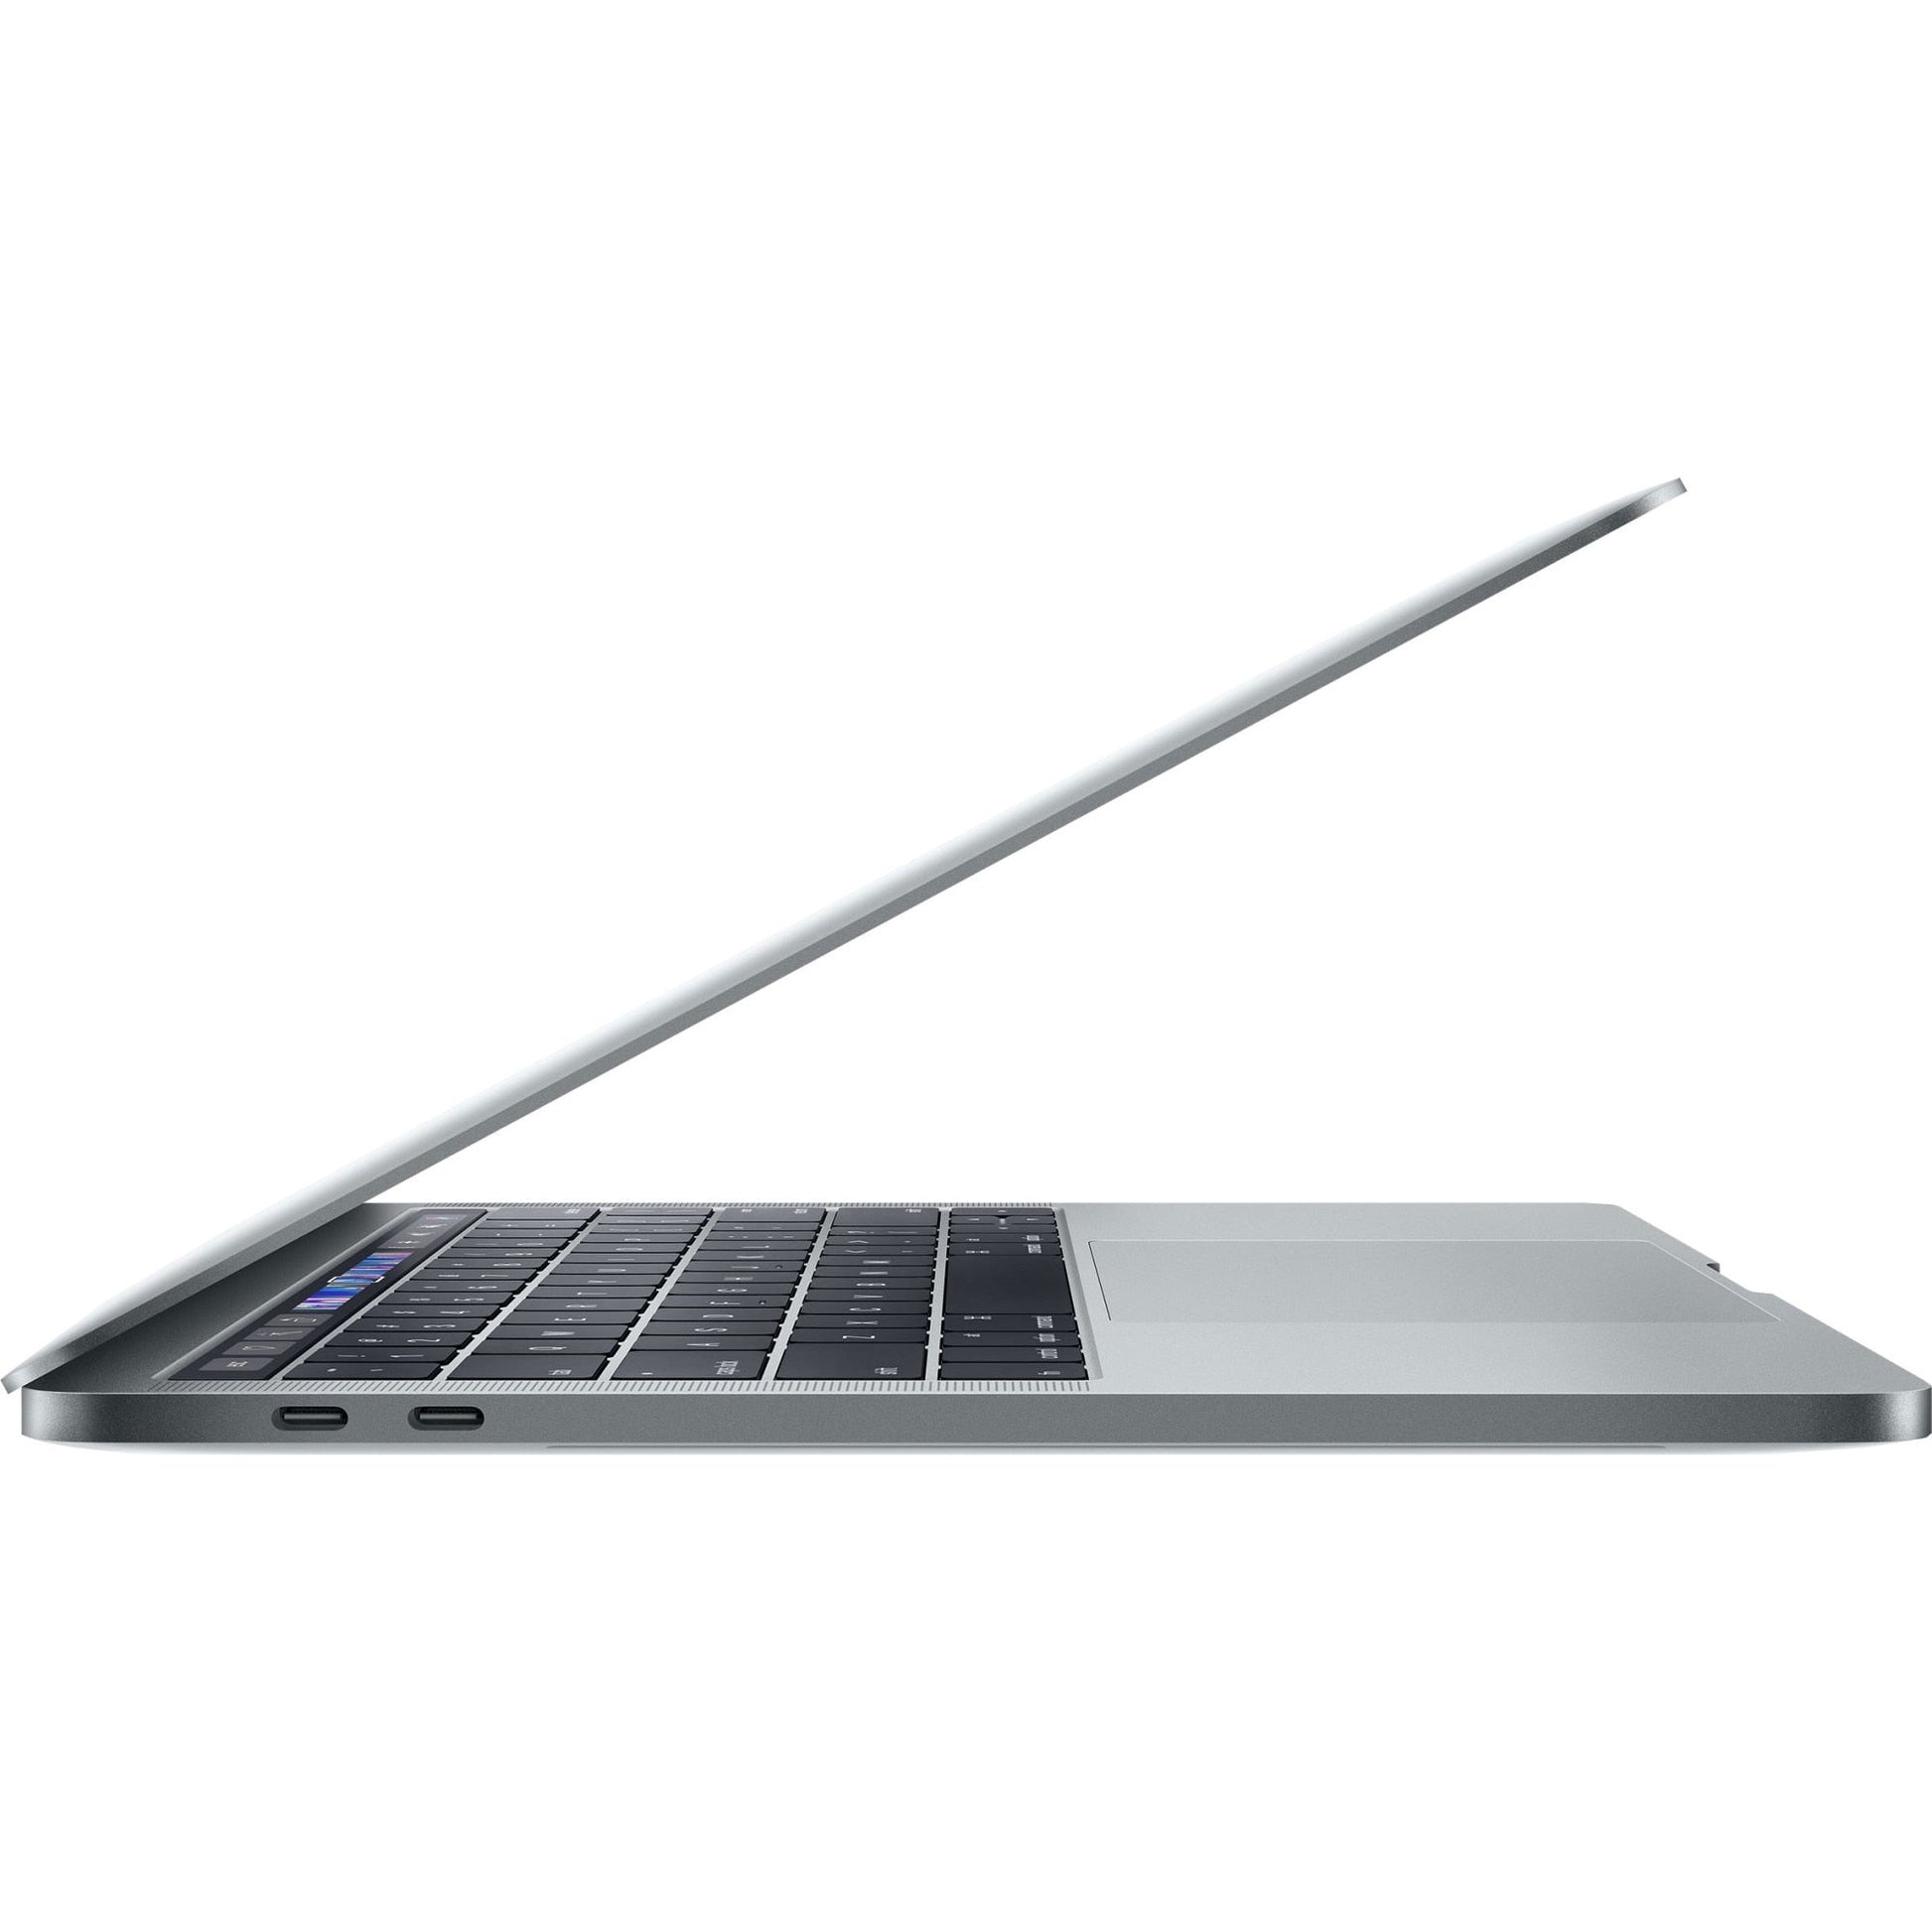 Apple Macbook Pro 13" 2019 Refurbished Core i7 2.8Ghz - refurbished